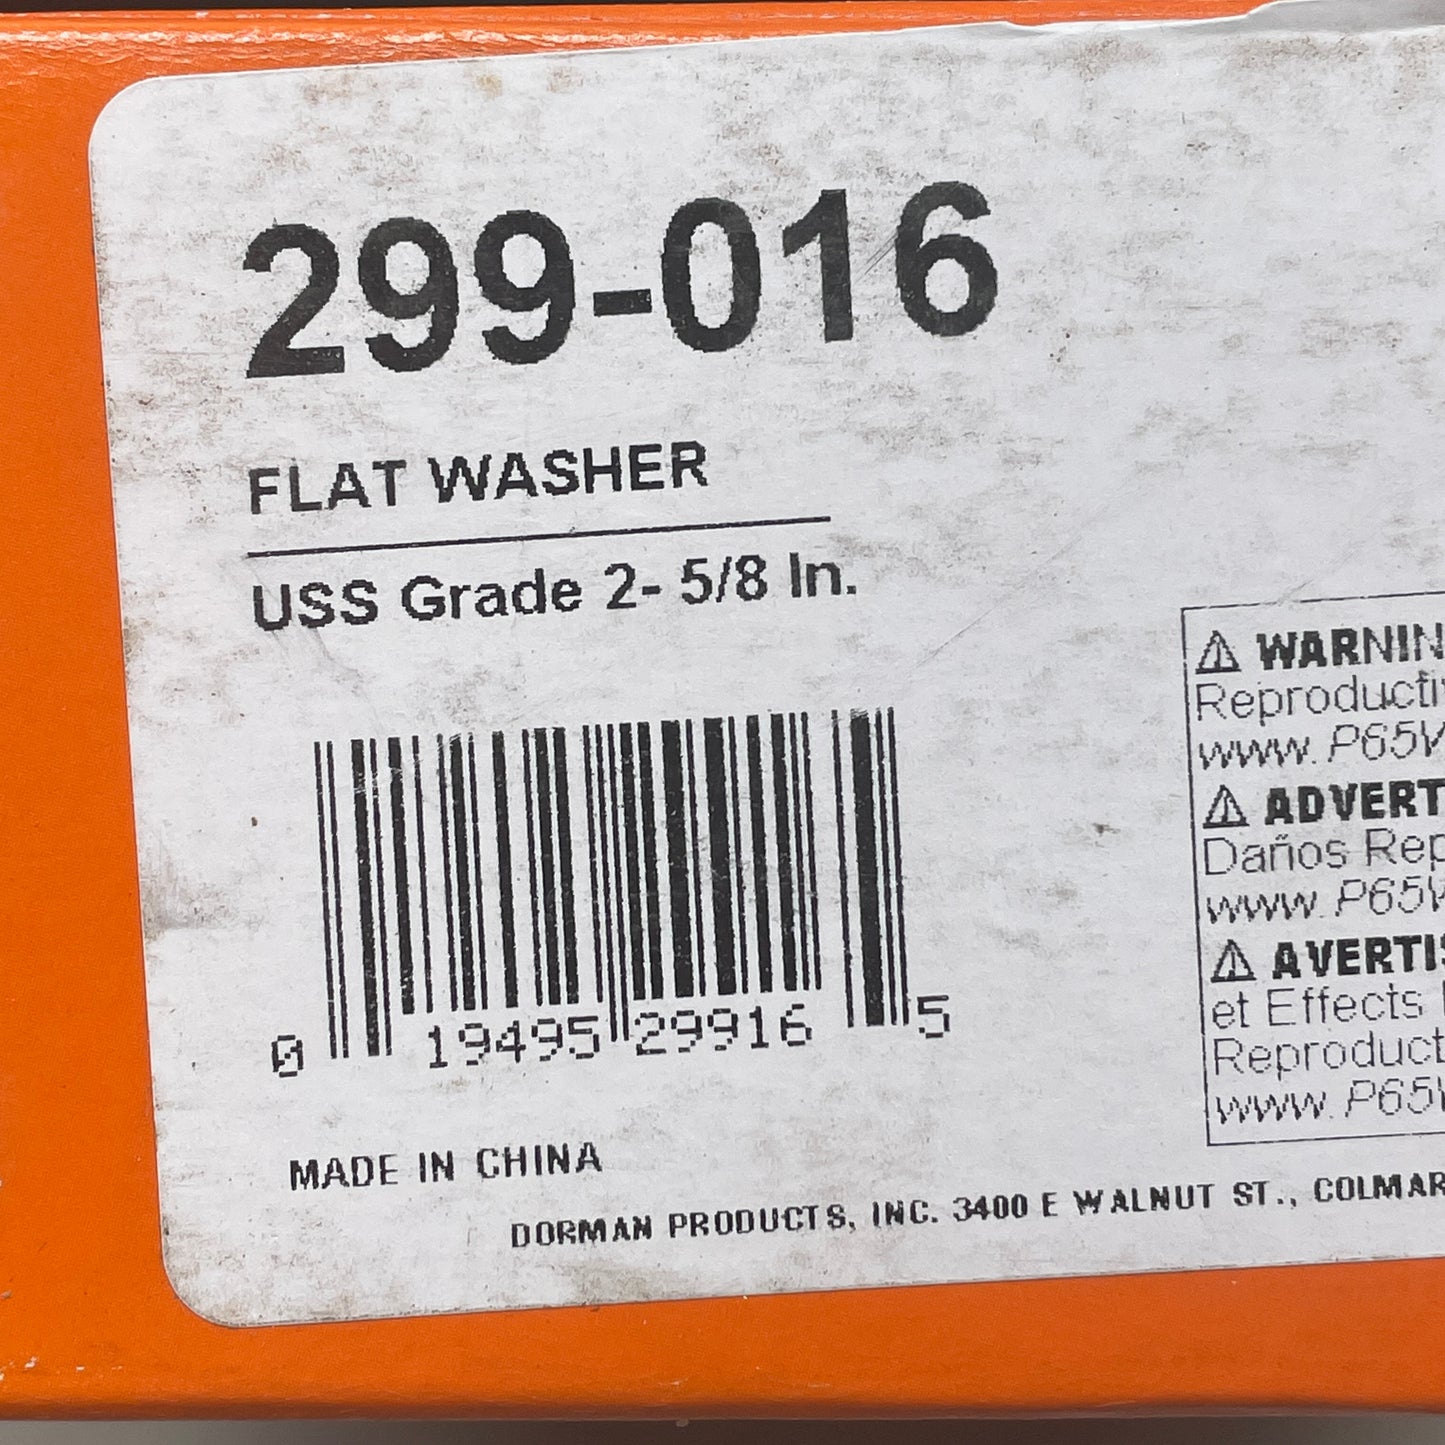 DORMAN (Box of 50) Flat Washers 299-016